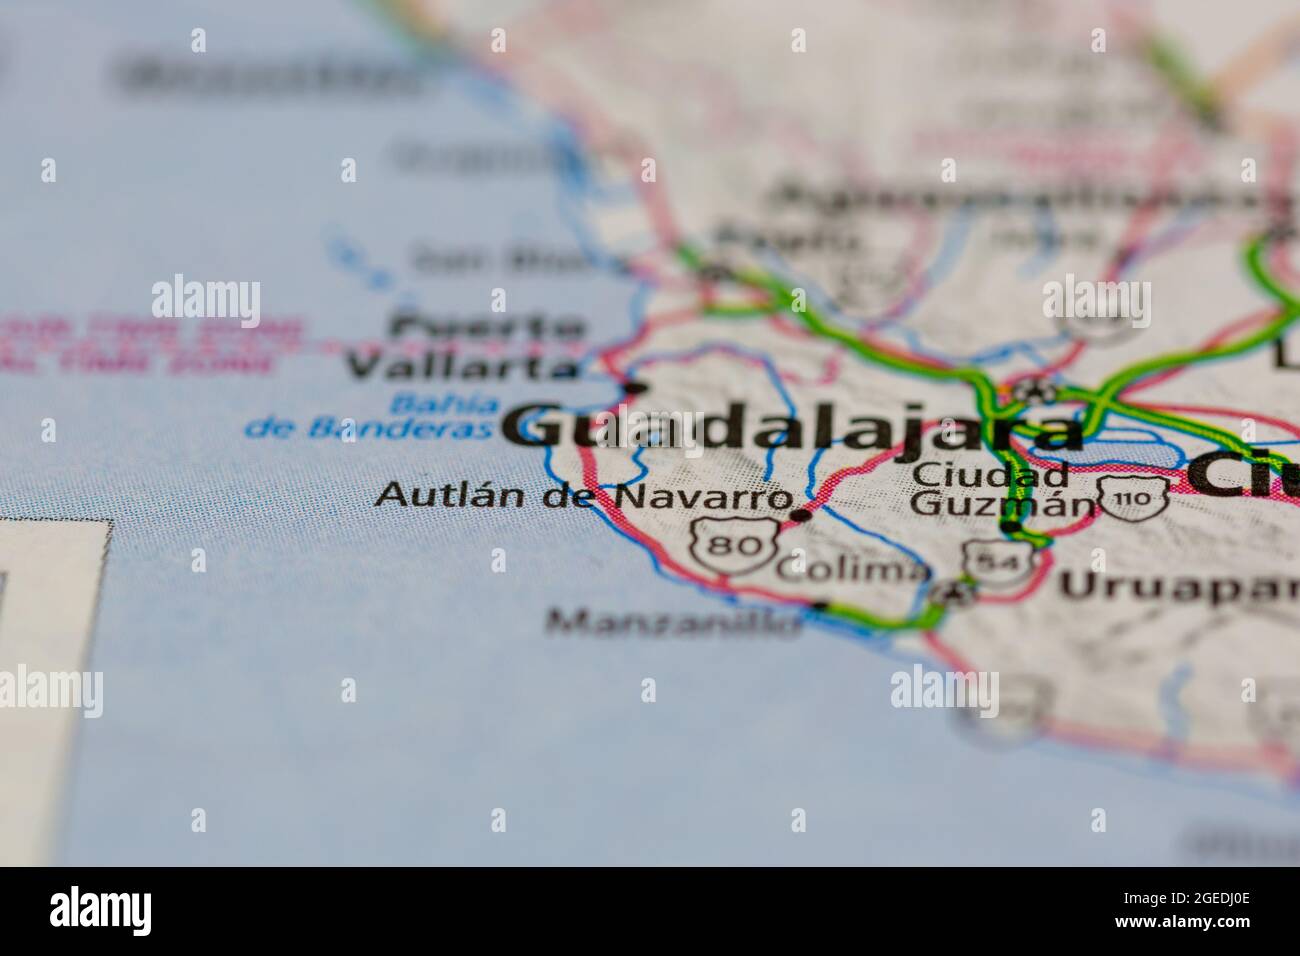 Autlan de Navarro Mexico shown on a road map or Geography map Stock Photo